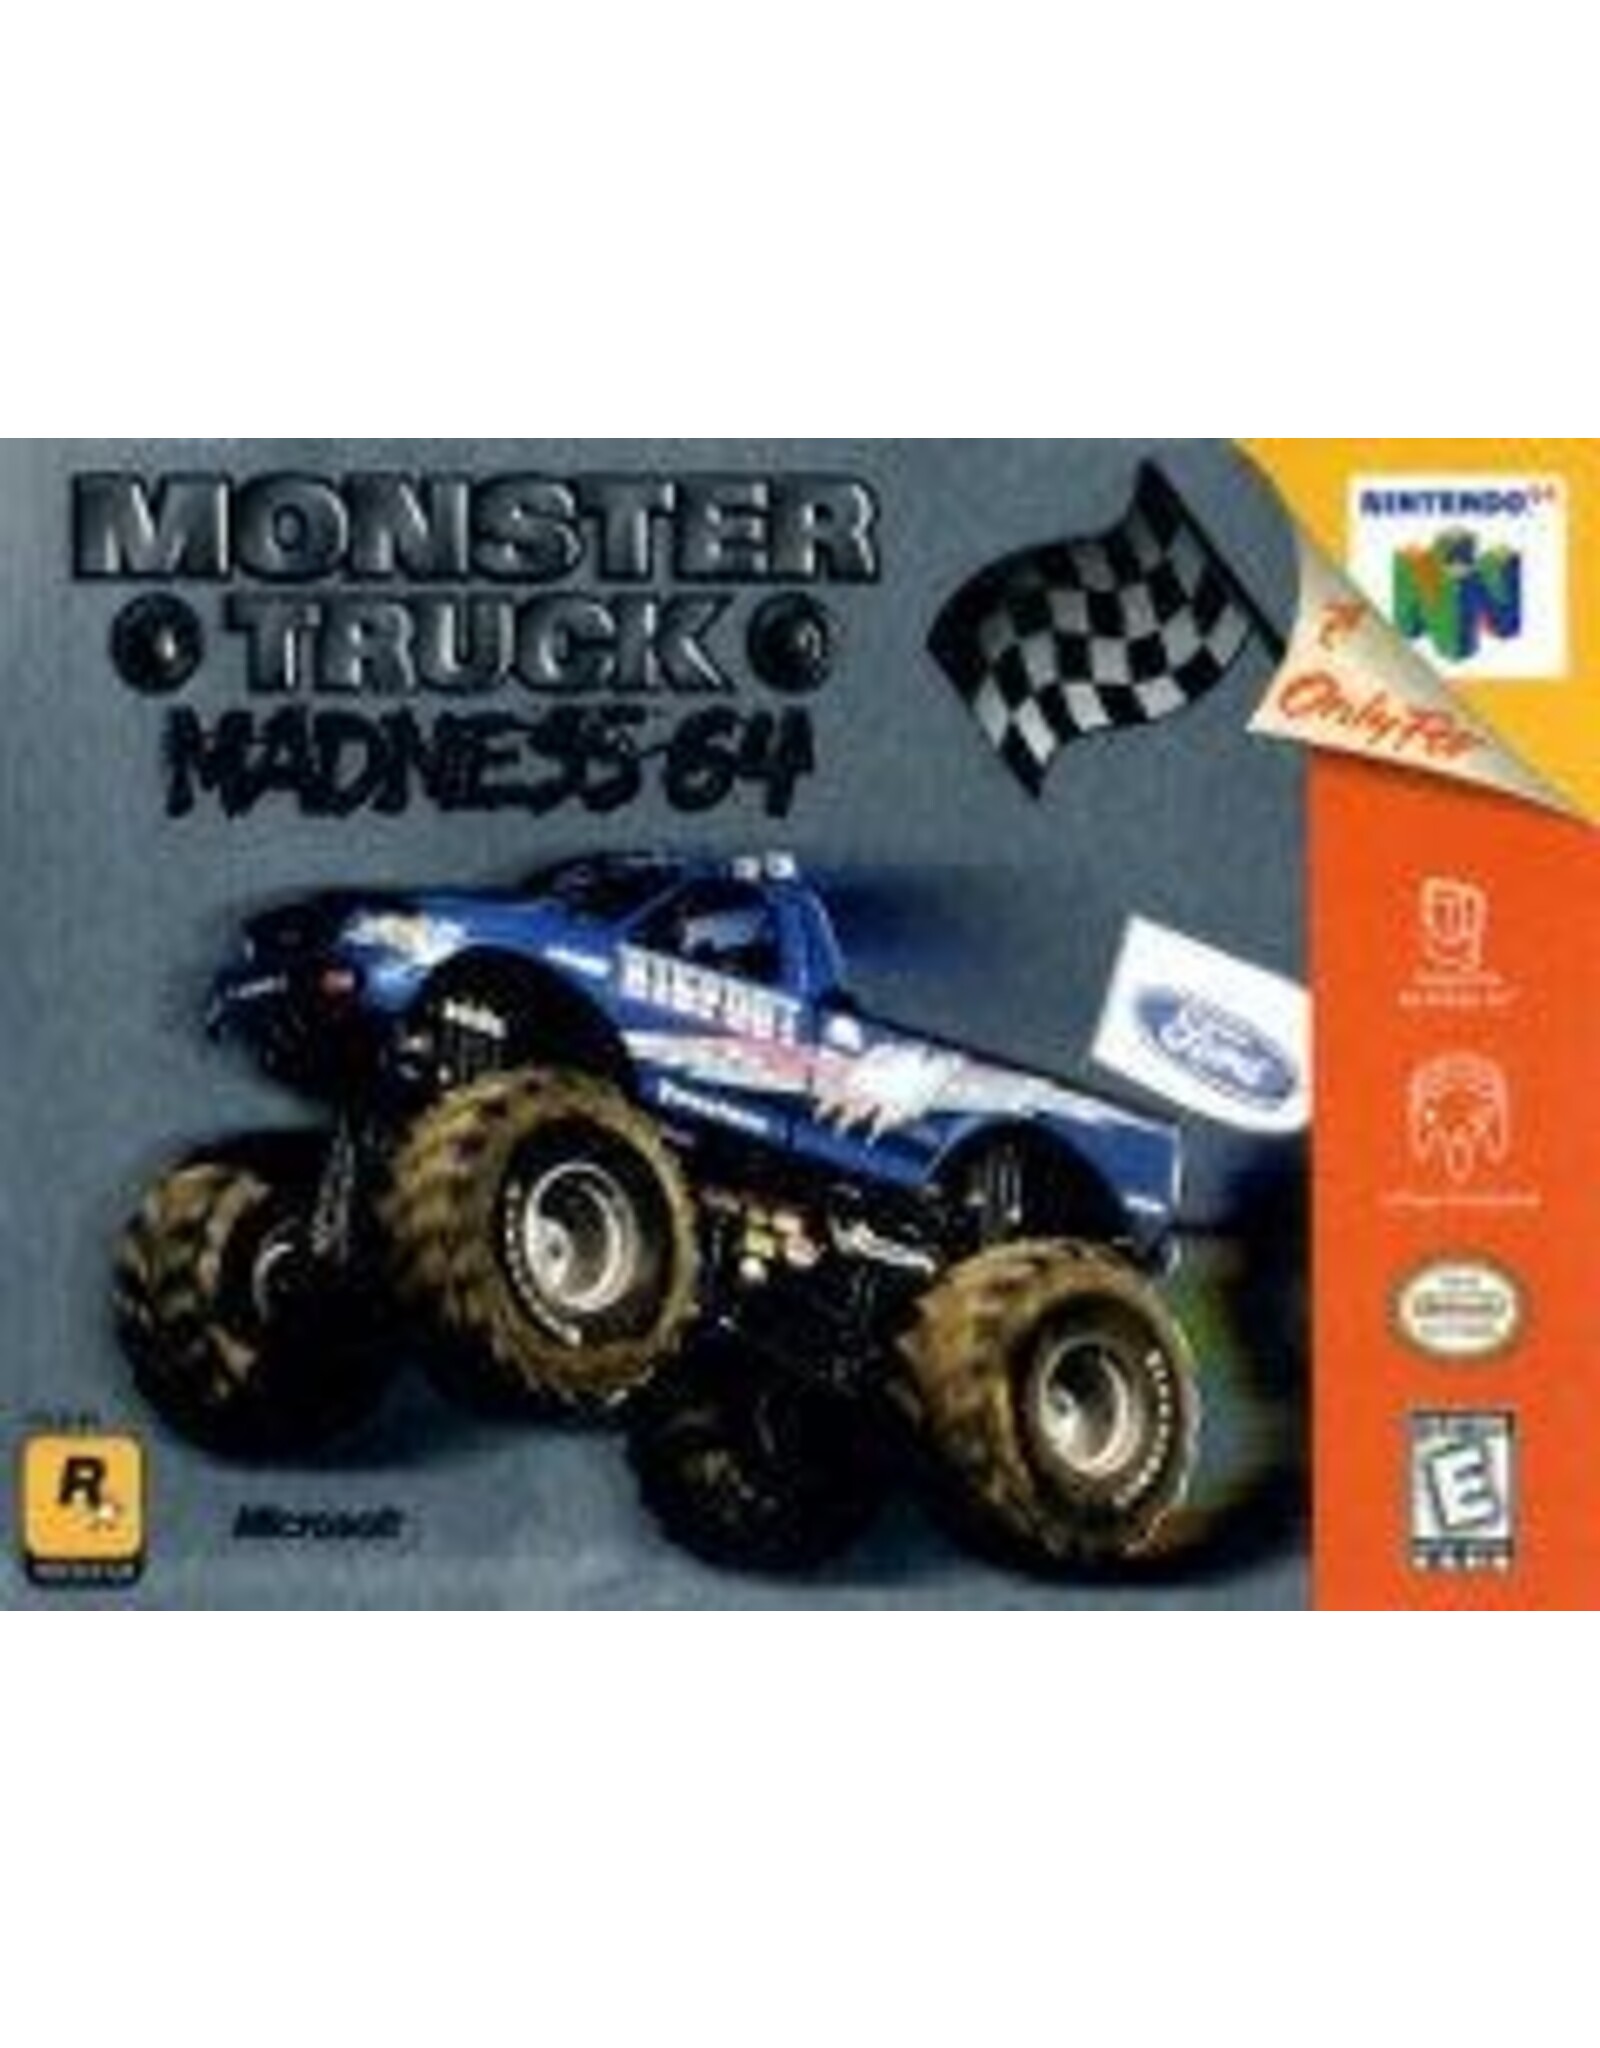 Nintendo 64 Monster Truck Madness 64 (CiB, Damaged Box)